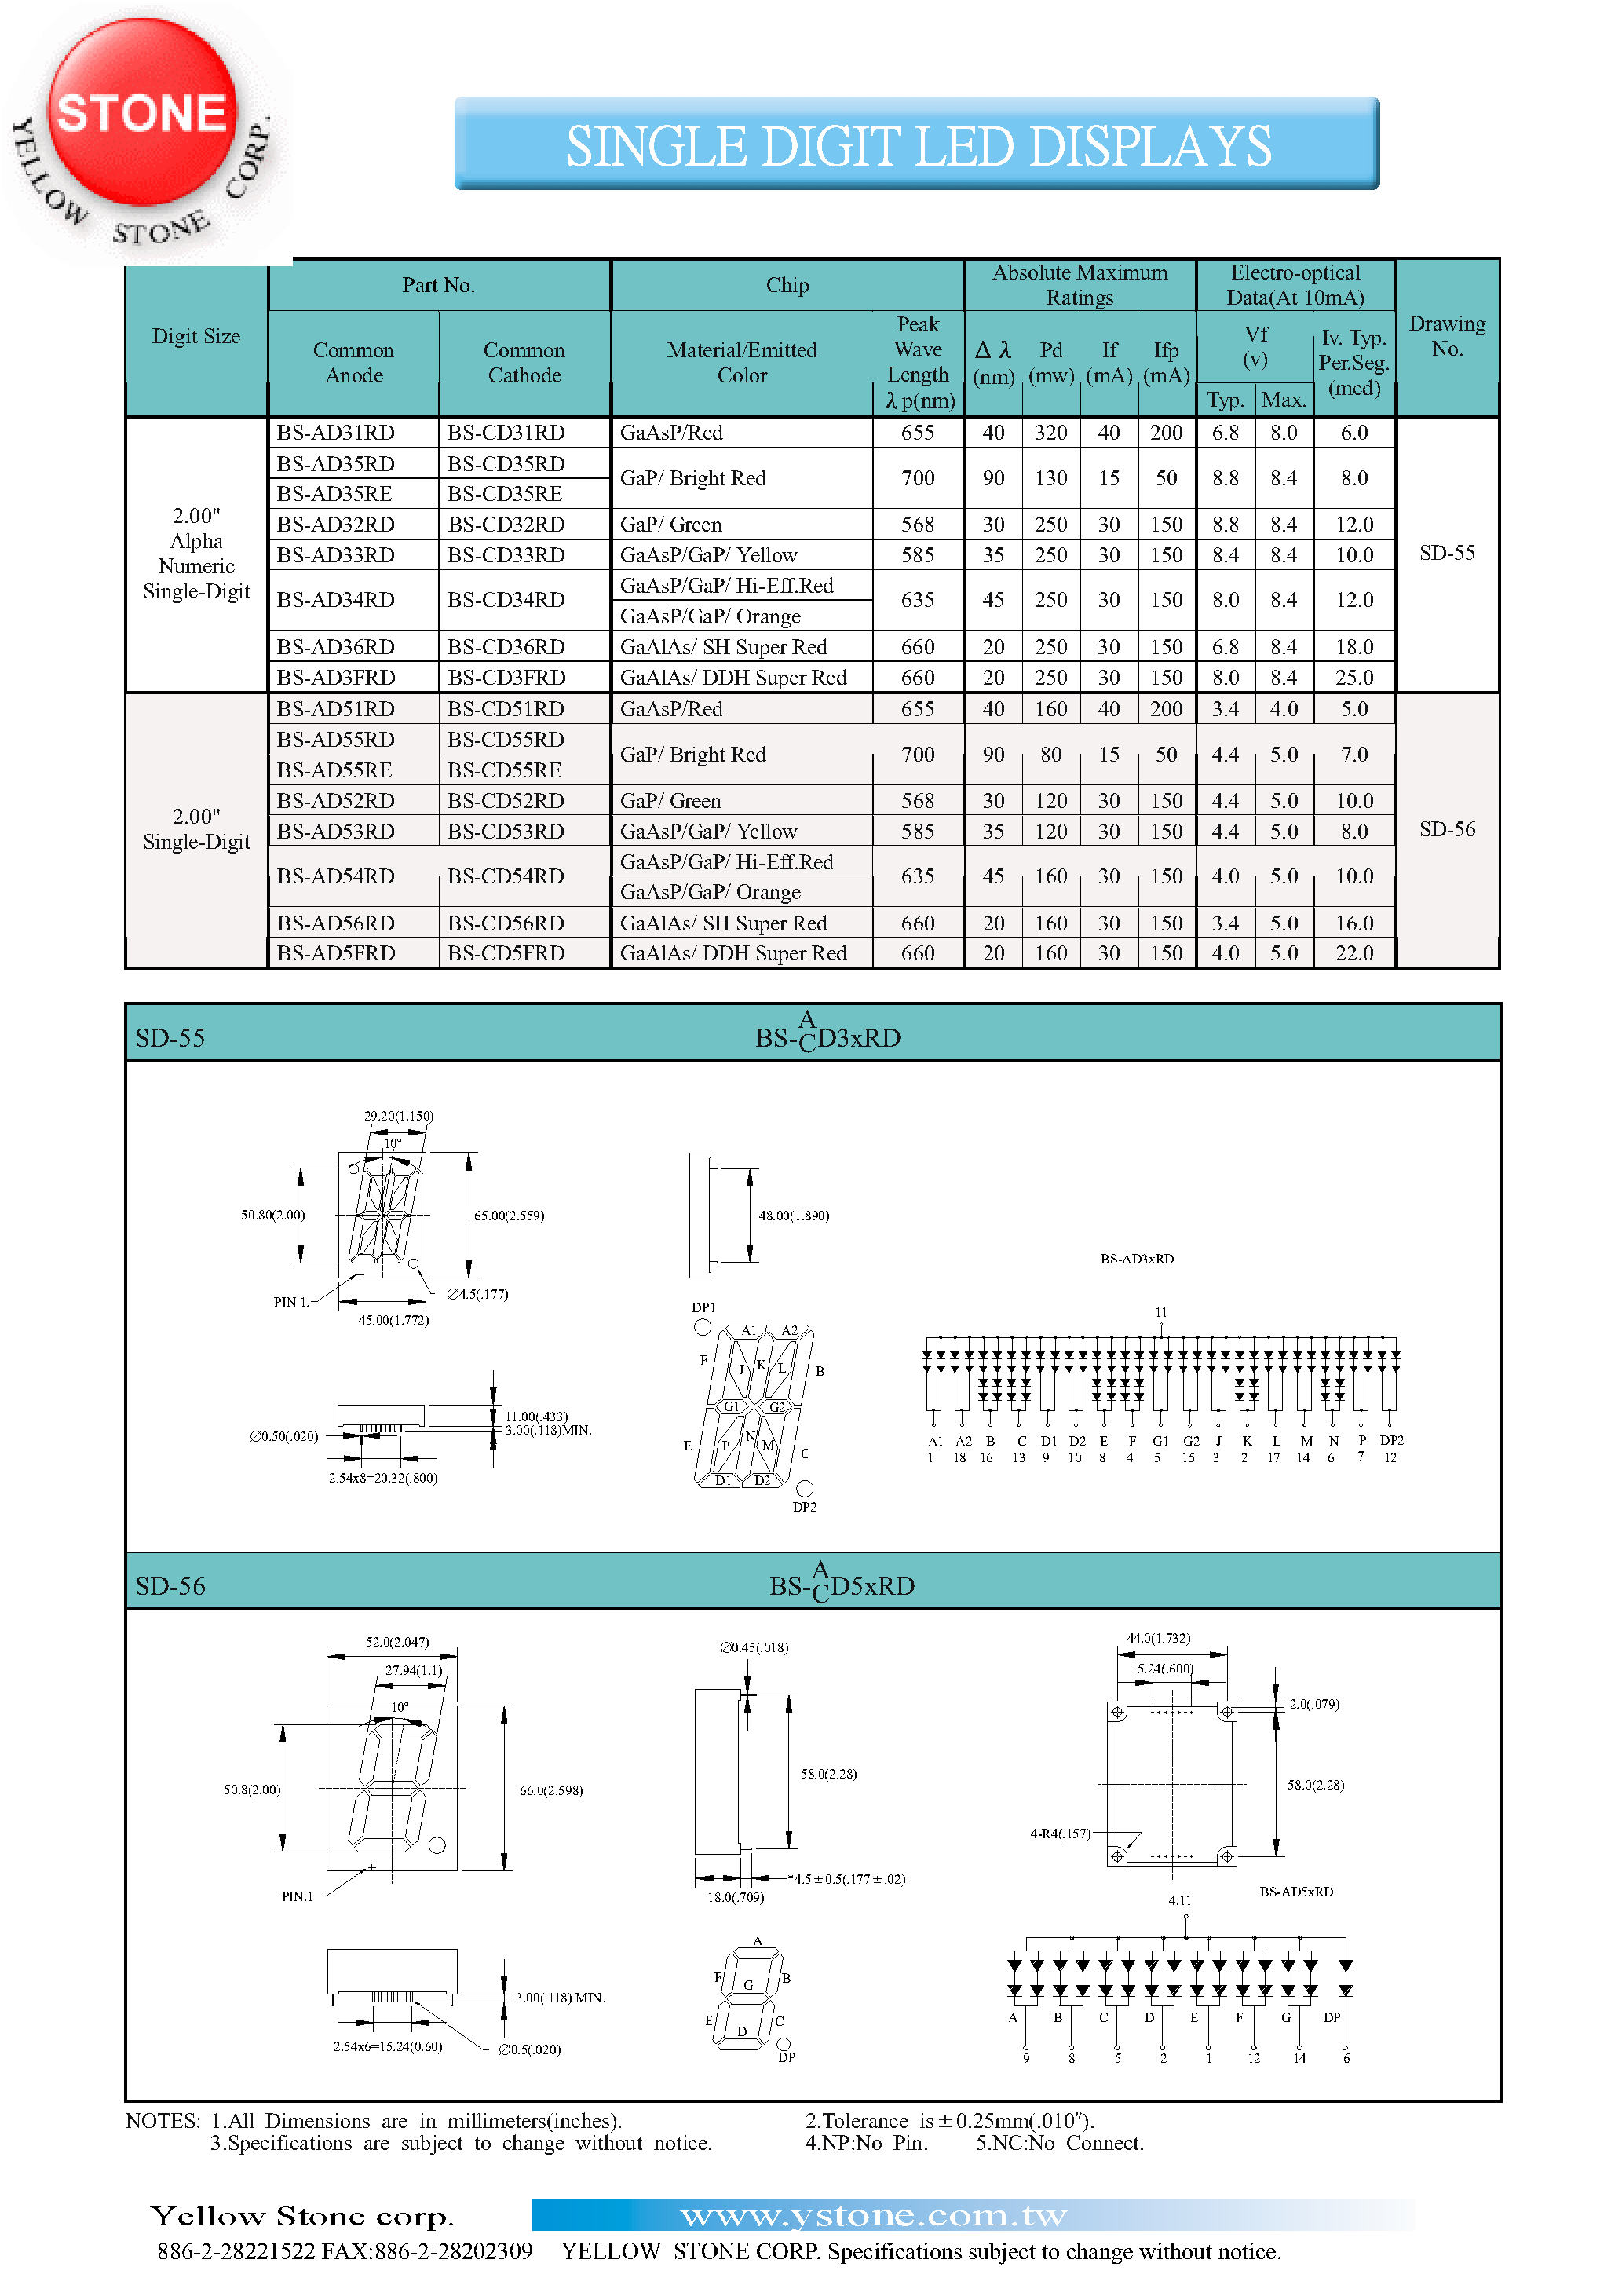 Datasheet BS-AD56RD - SINGLE DIGIT LED DISPLAYS page 1